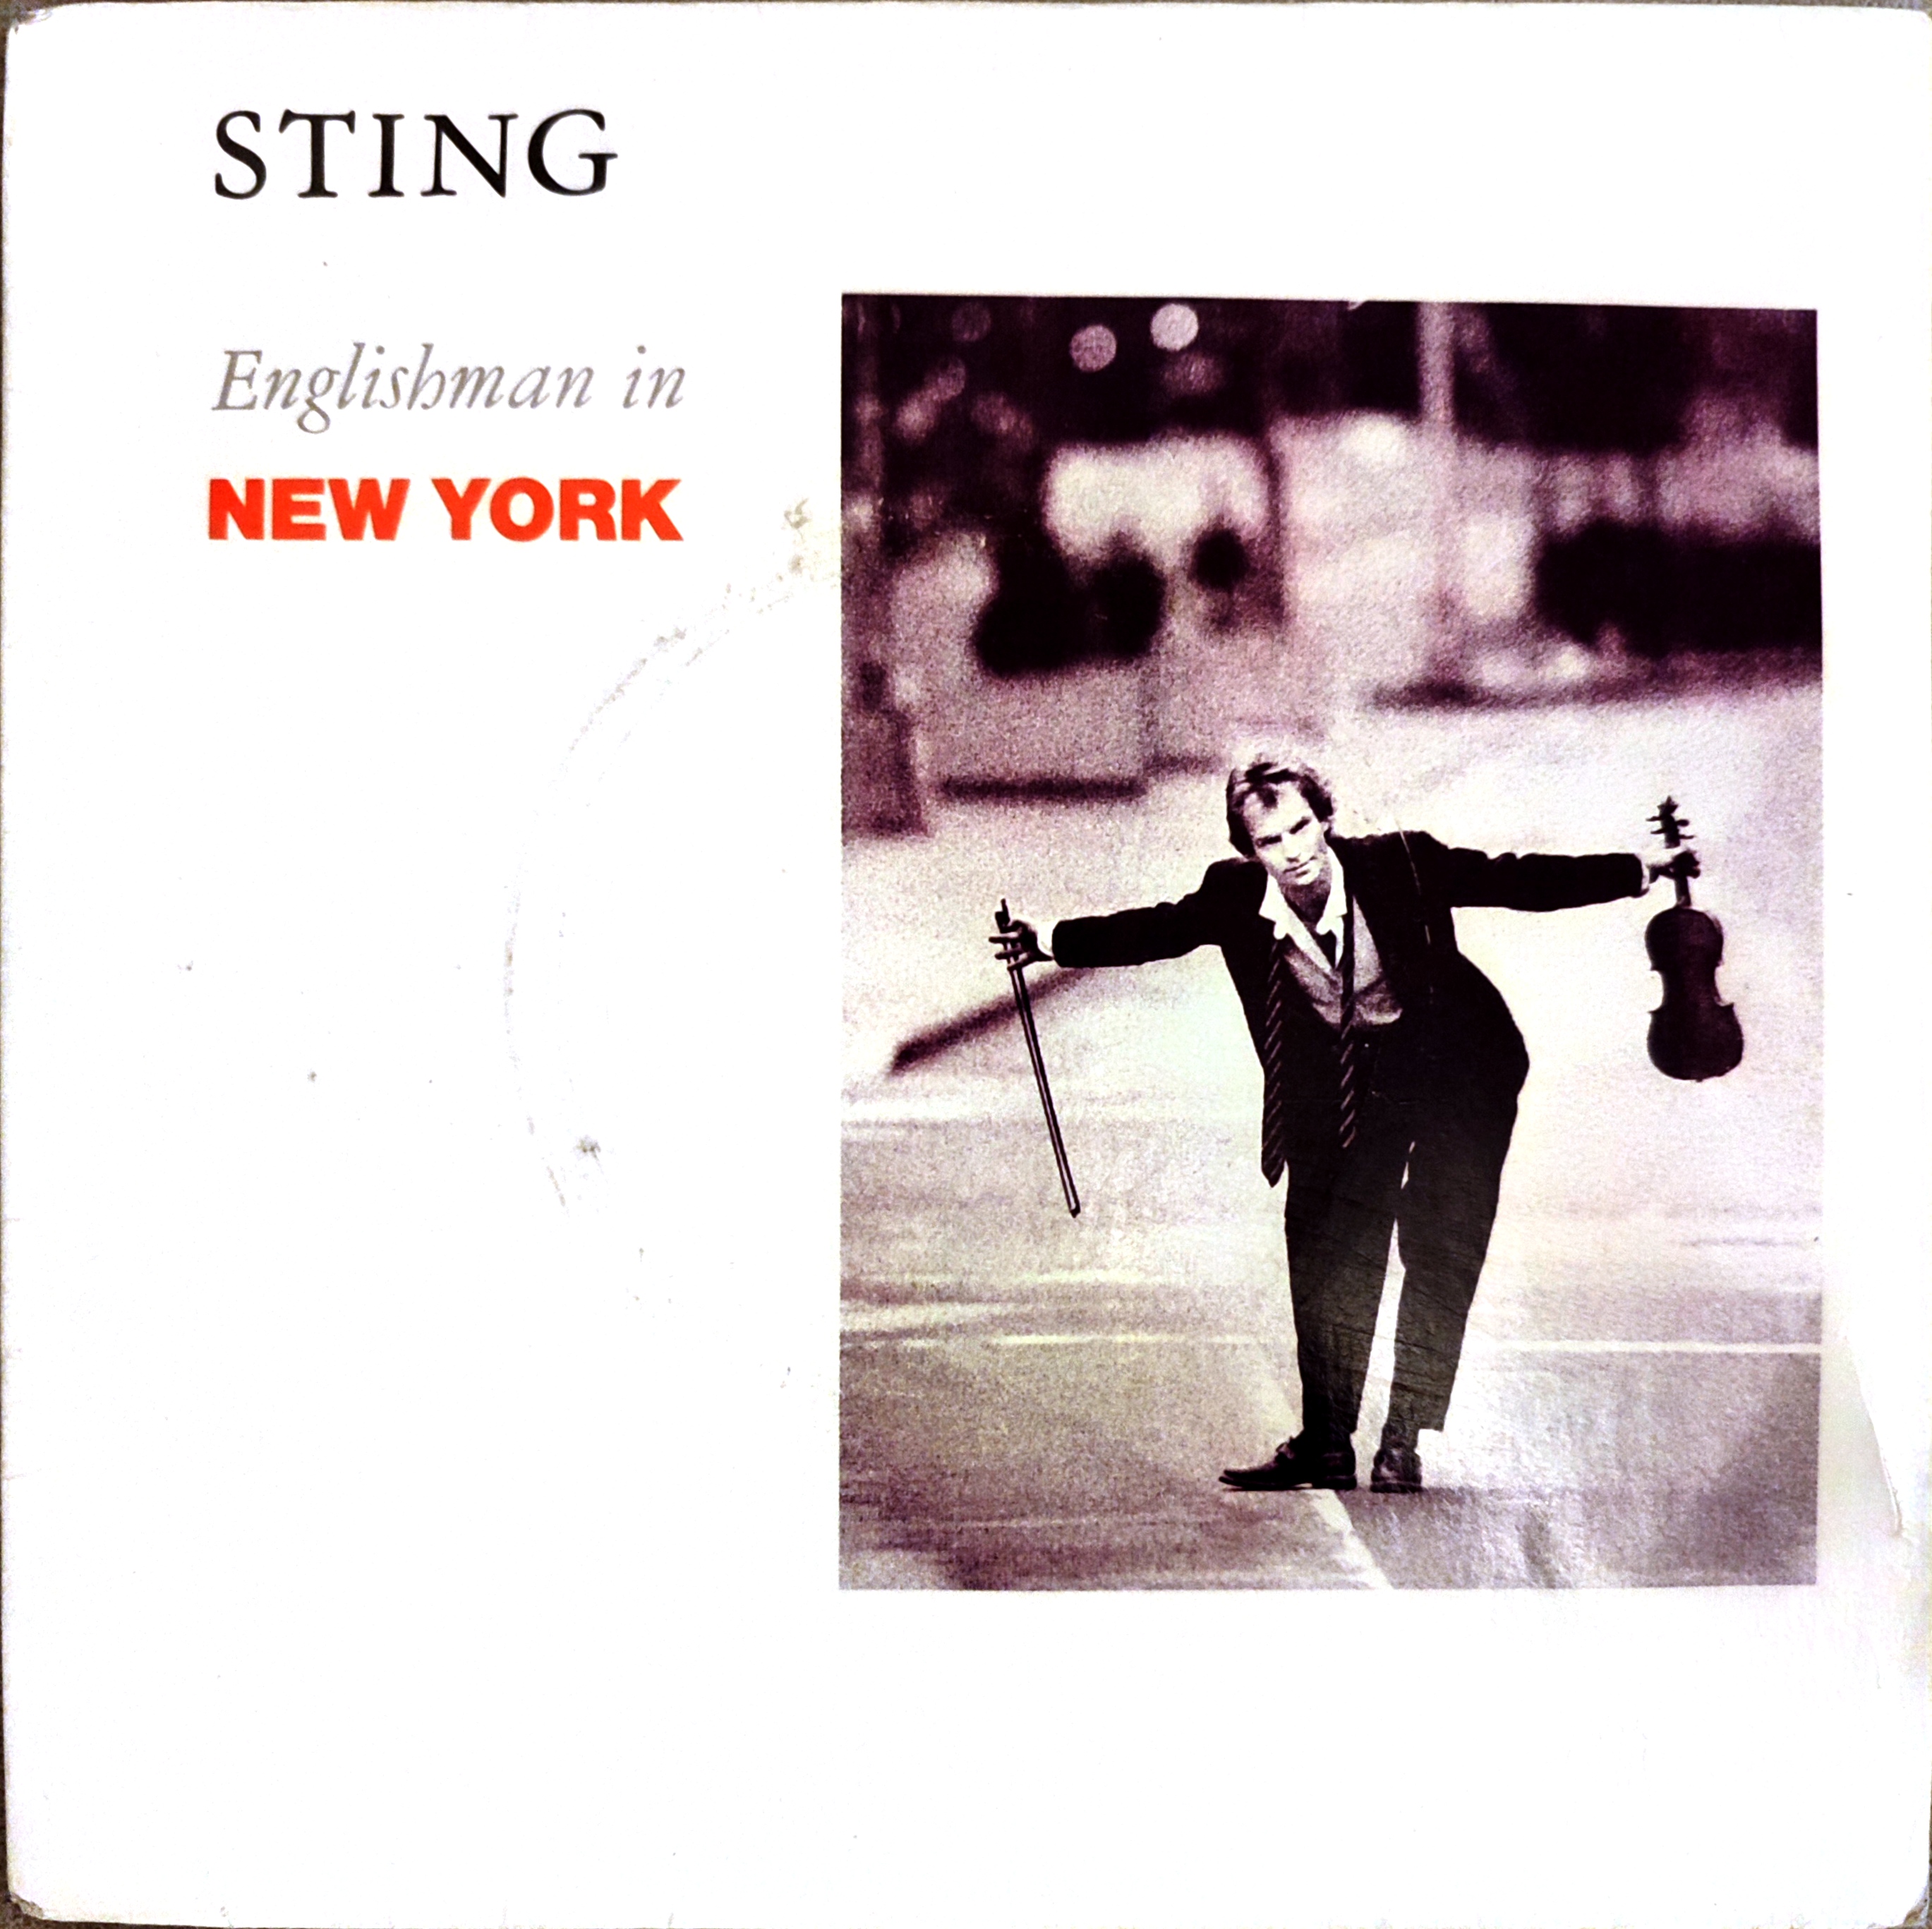 STING - Englishman in New York - 1988 Fransa Basım Nadir 45lik Plak 2. el